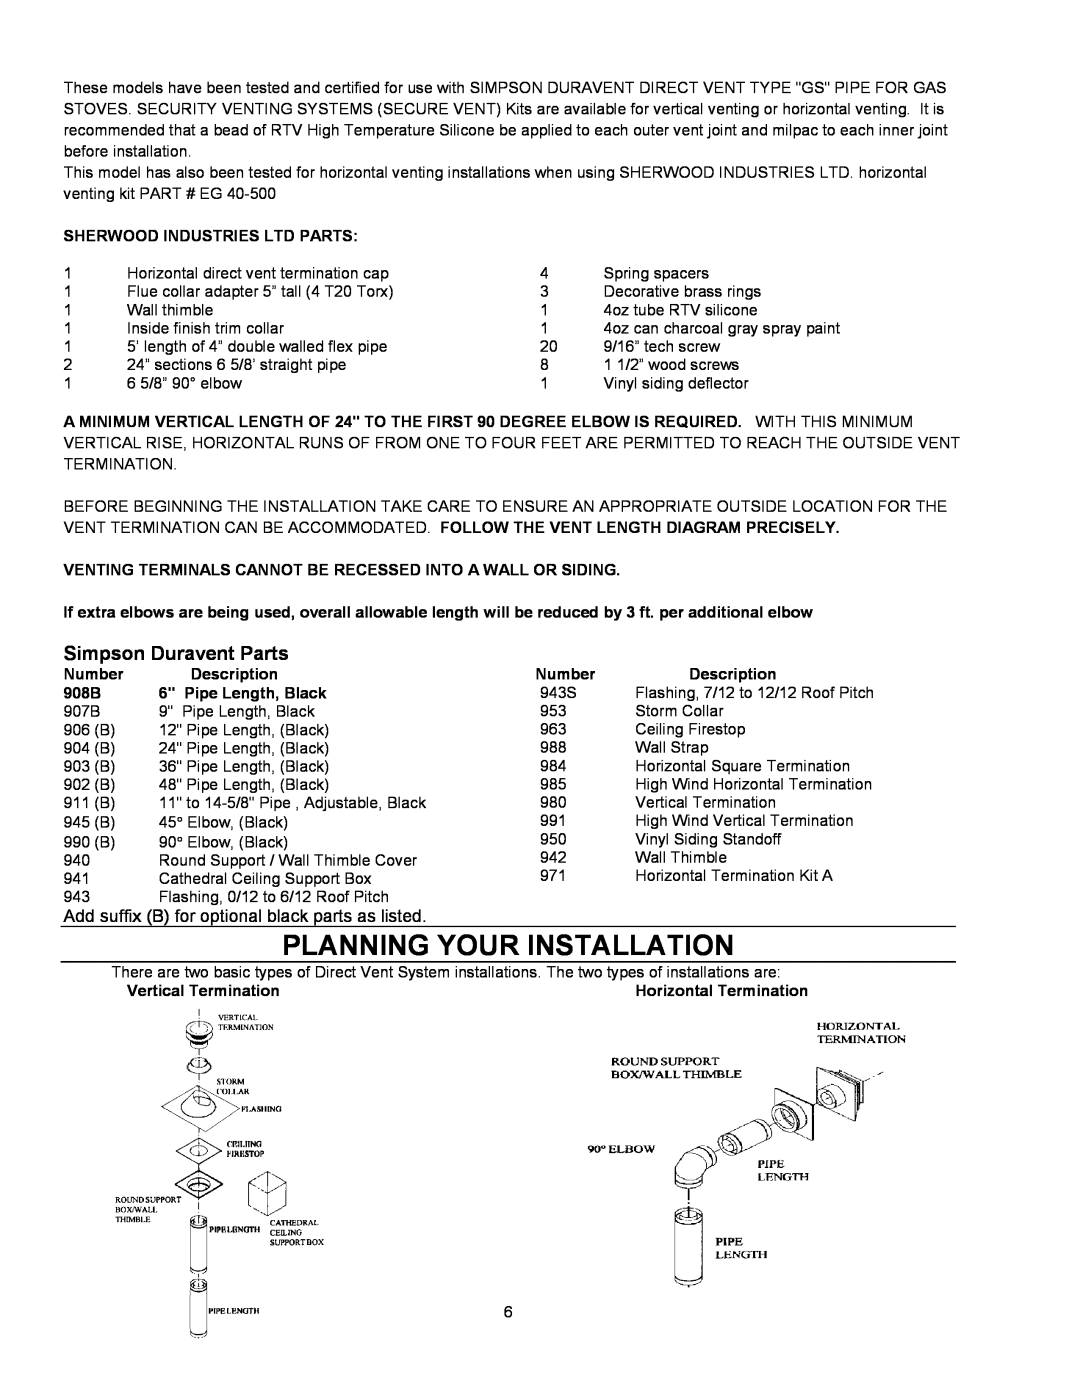 Enviro EG 28 owner manual Planning Your Installation, Simpson Duravent Parts 